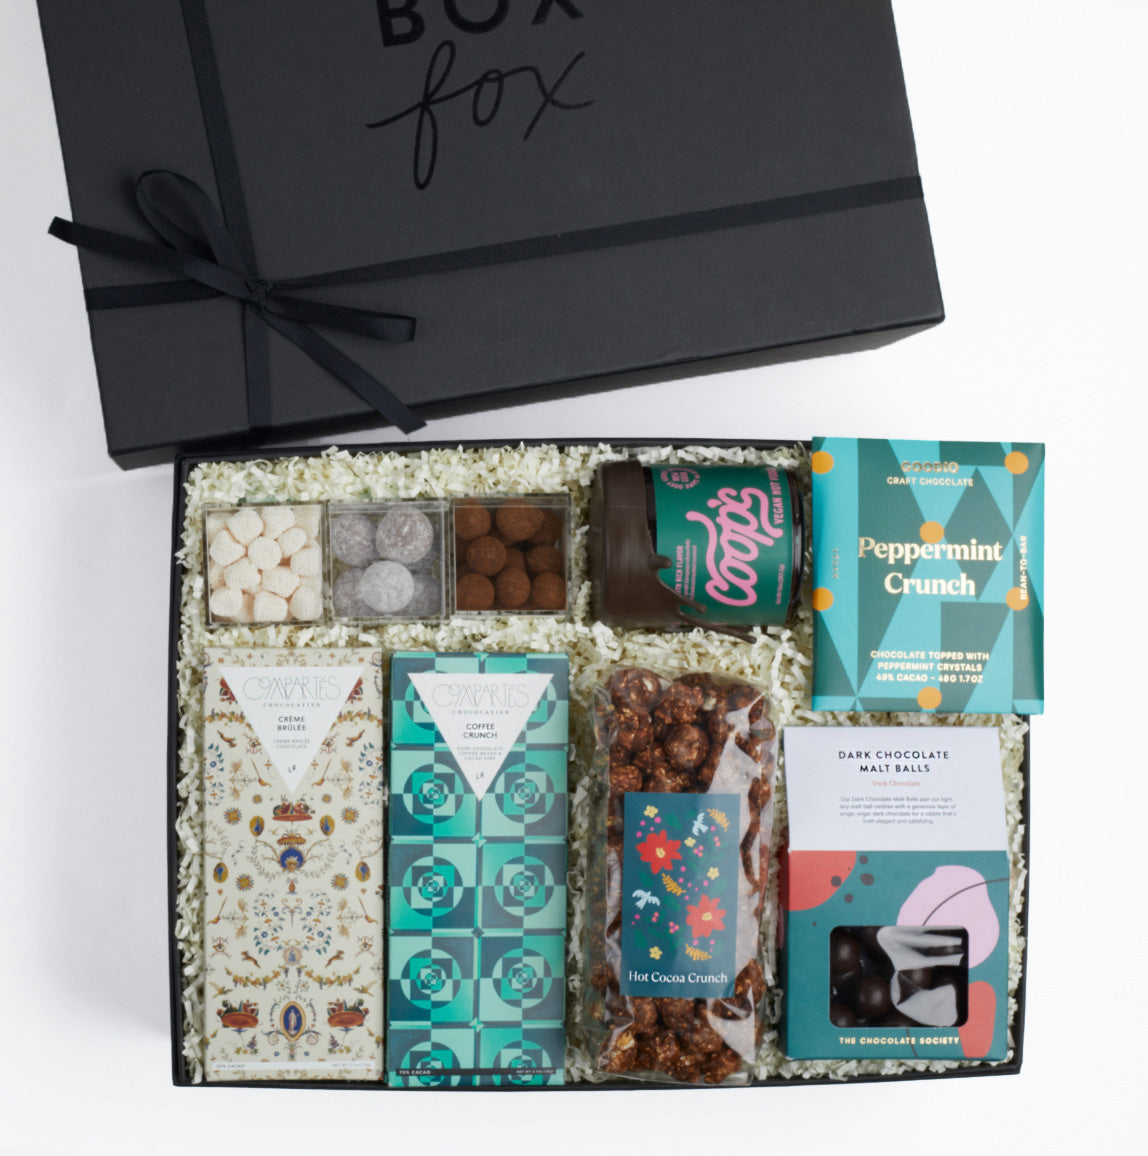 BOXFOX black gift box packed with hot cocoa crunch popcorn, dark chocolate malt balls, compartes chocolate bars, 3 sugarfina candies, vegan hot fudge jar and goodio peppermint crunch chocolate